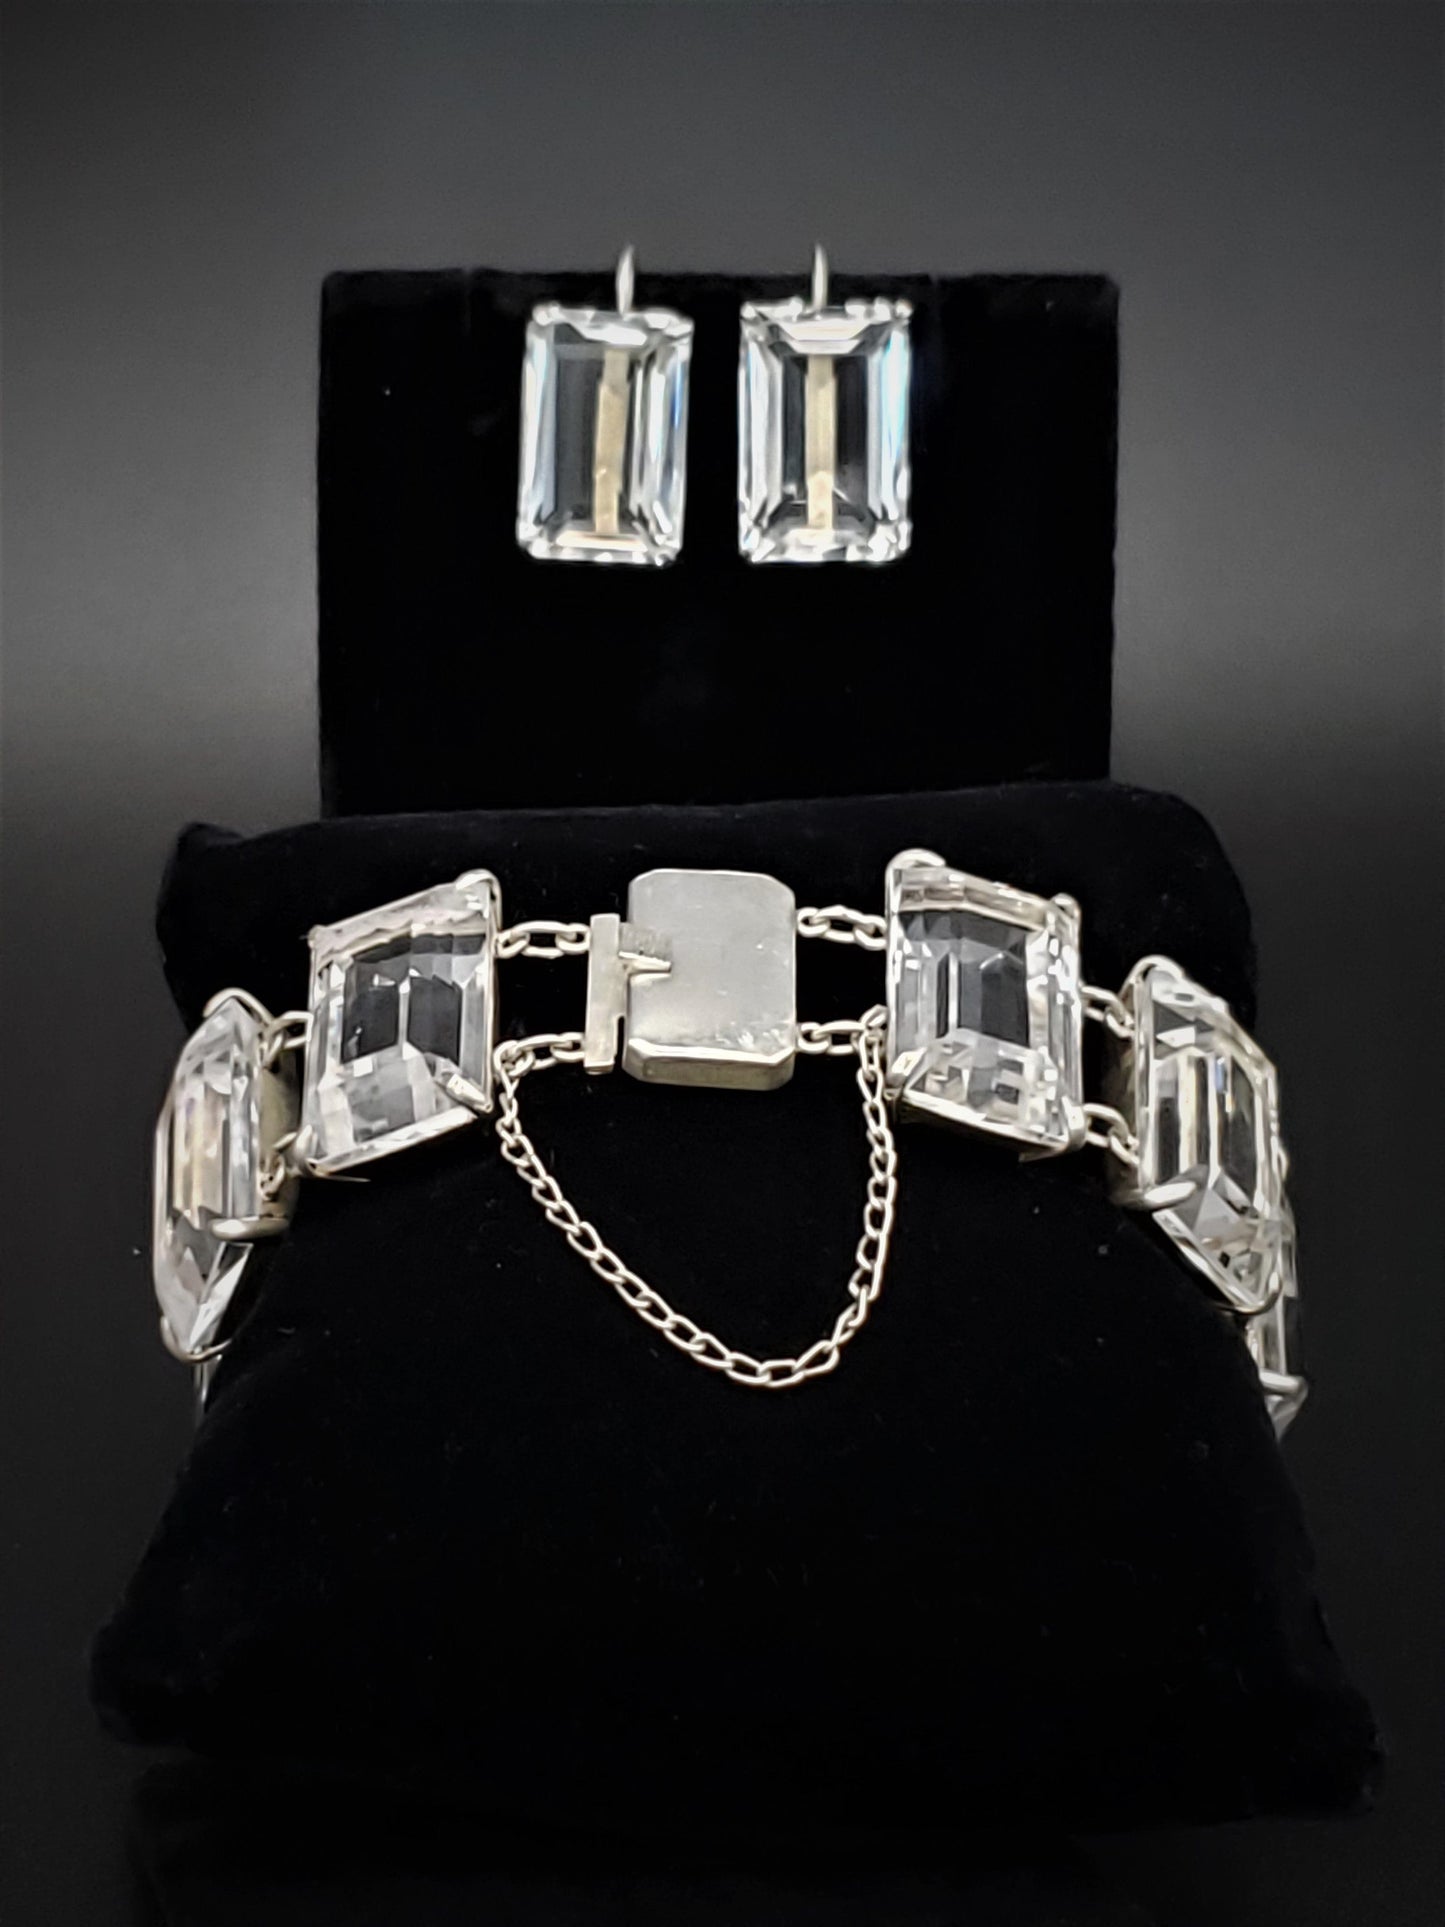 Japan Silver Jewelry Superb Japanese Sterling Art Deco Quartz Crystal Bracelet Earrings SET 1930s